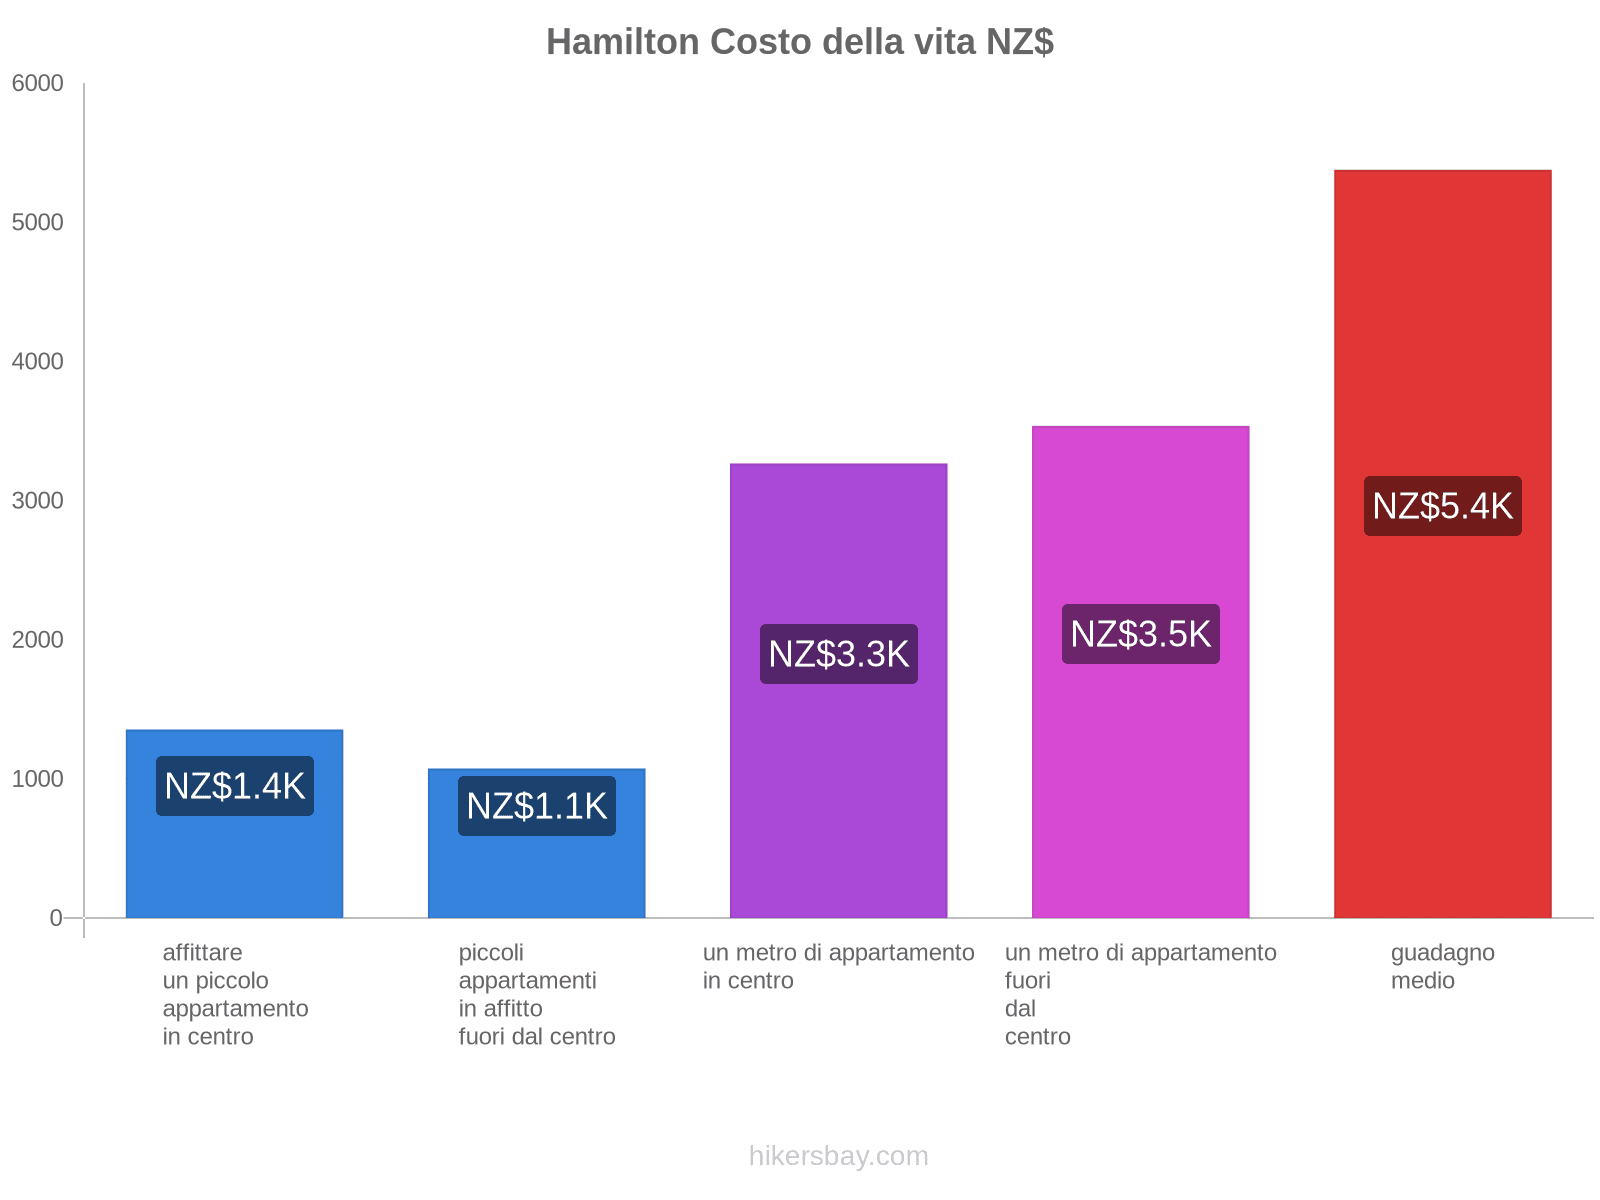 Hamilton costo della vita hikersbay.com